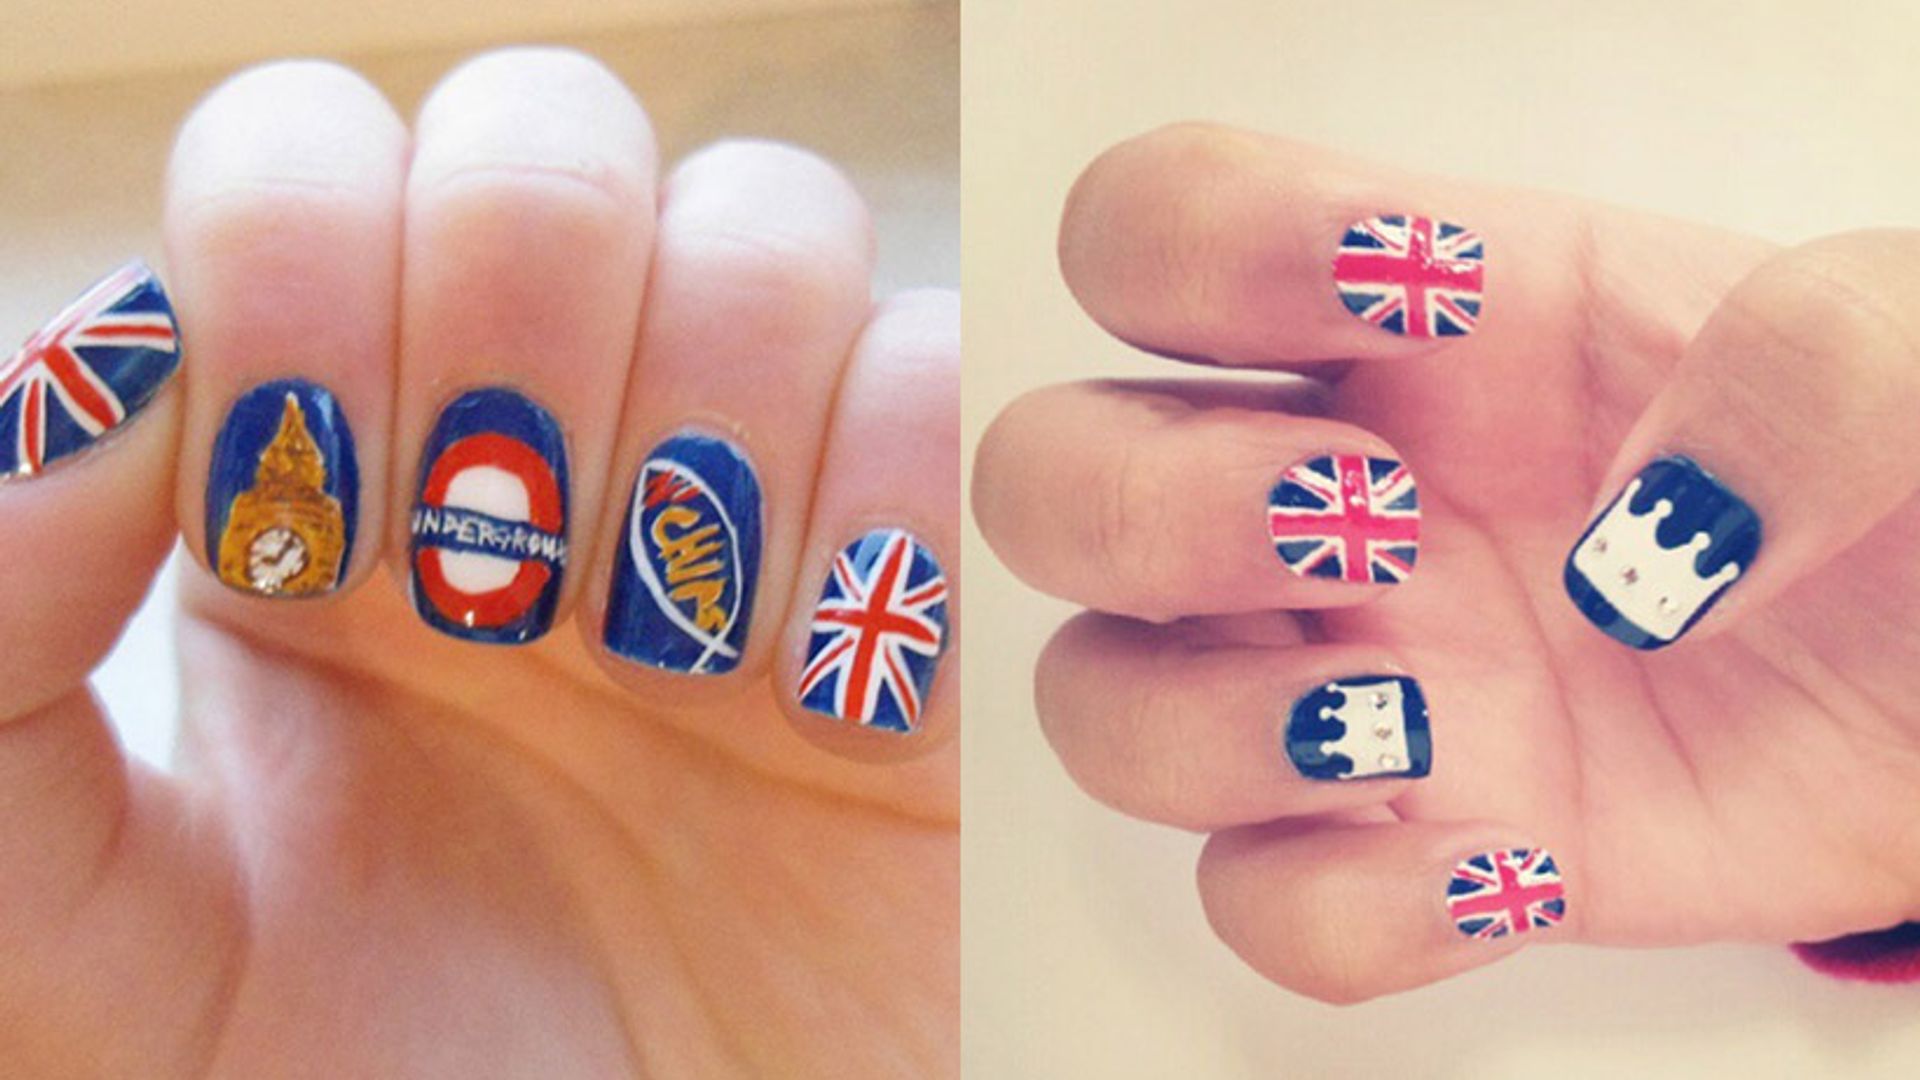 British GLAMOUR on Instagram | Subtle nails, Minimal nails art, Nails